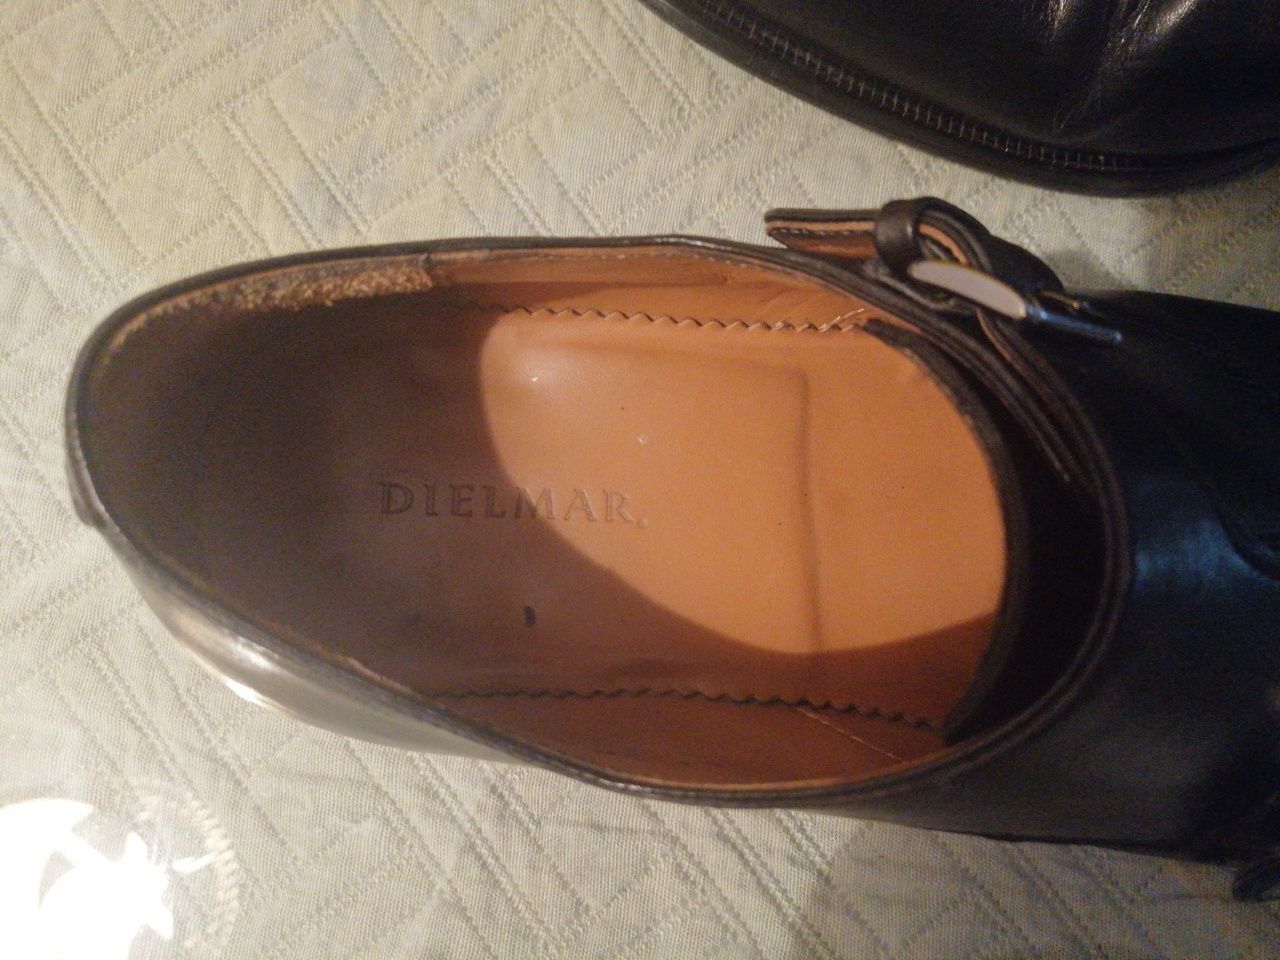 Sapatos Dielmar Luxo, fivela dupla